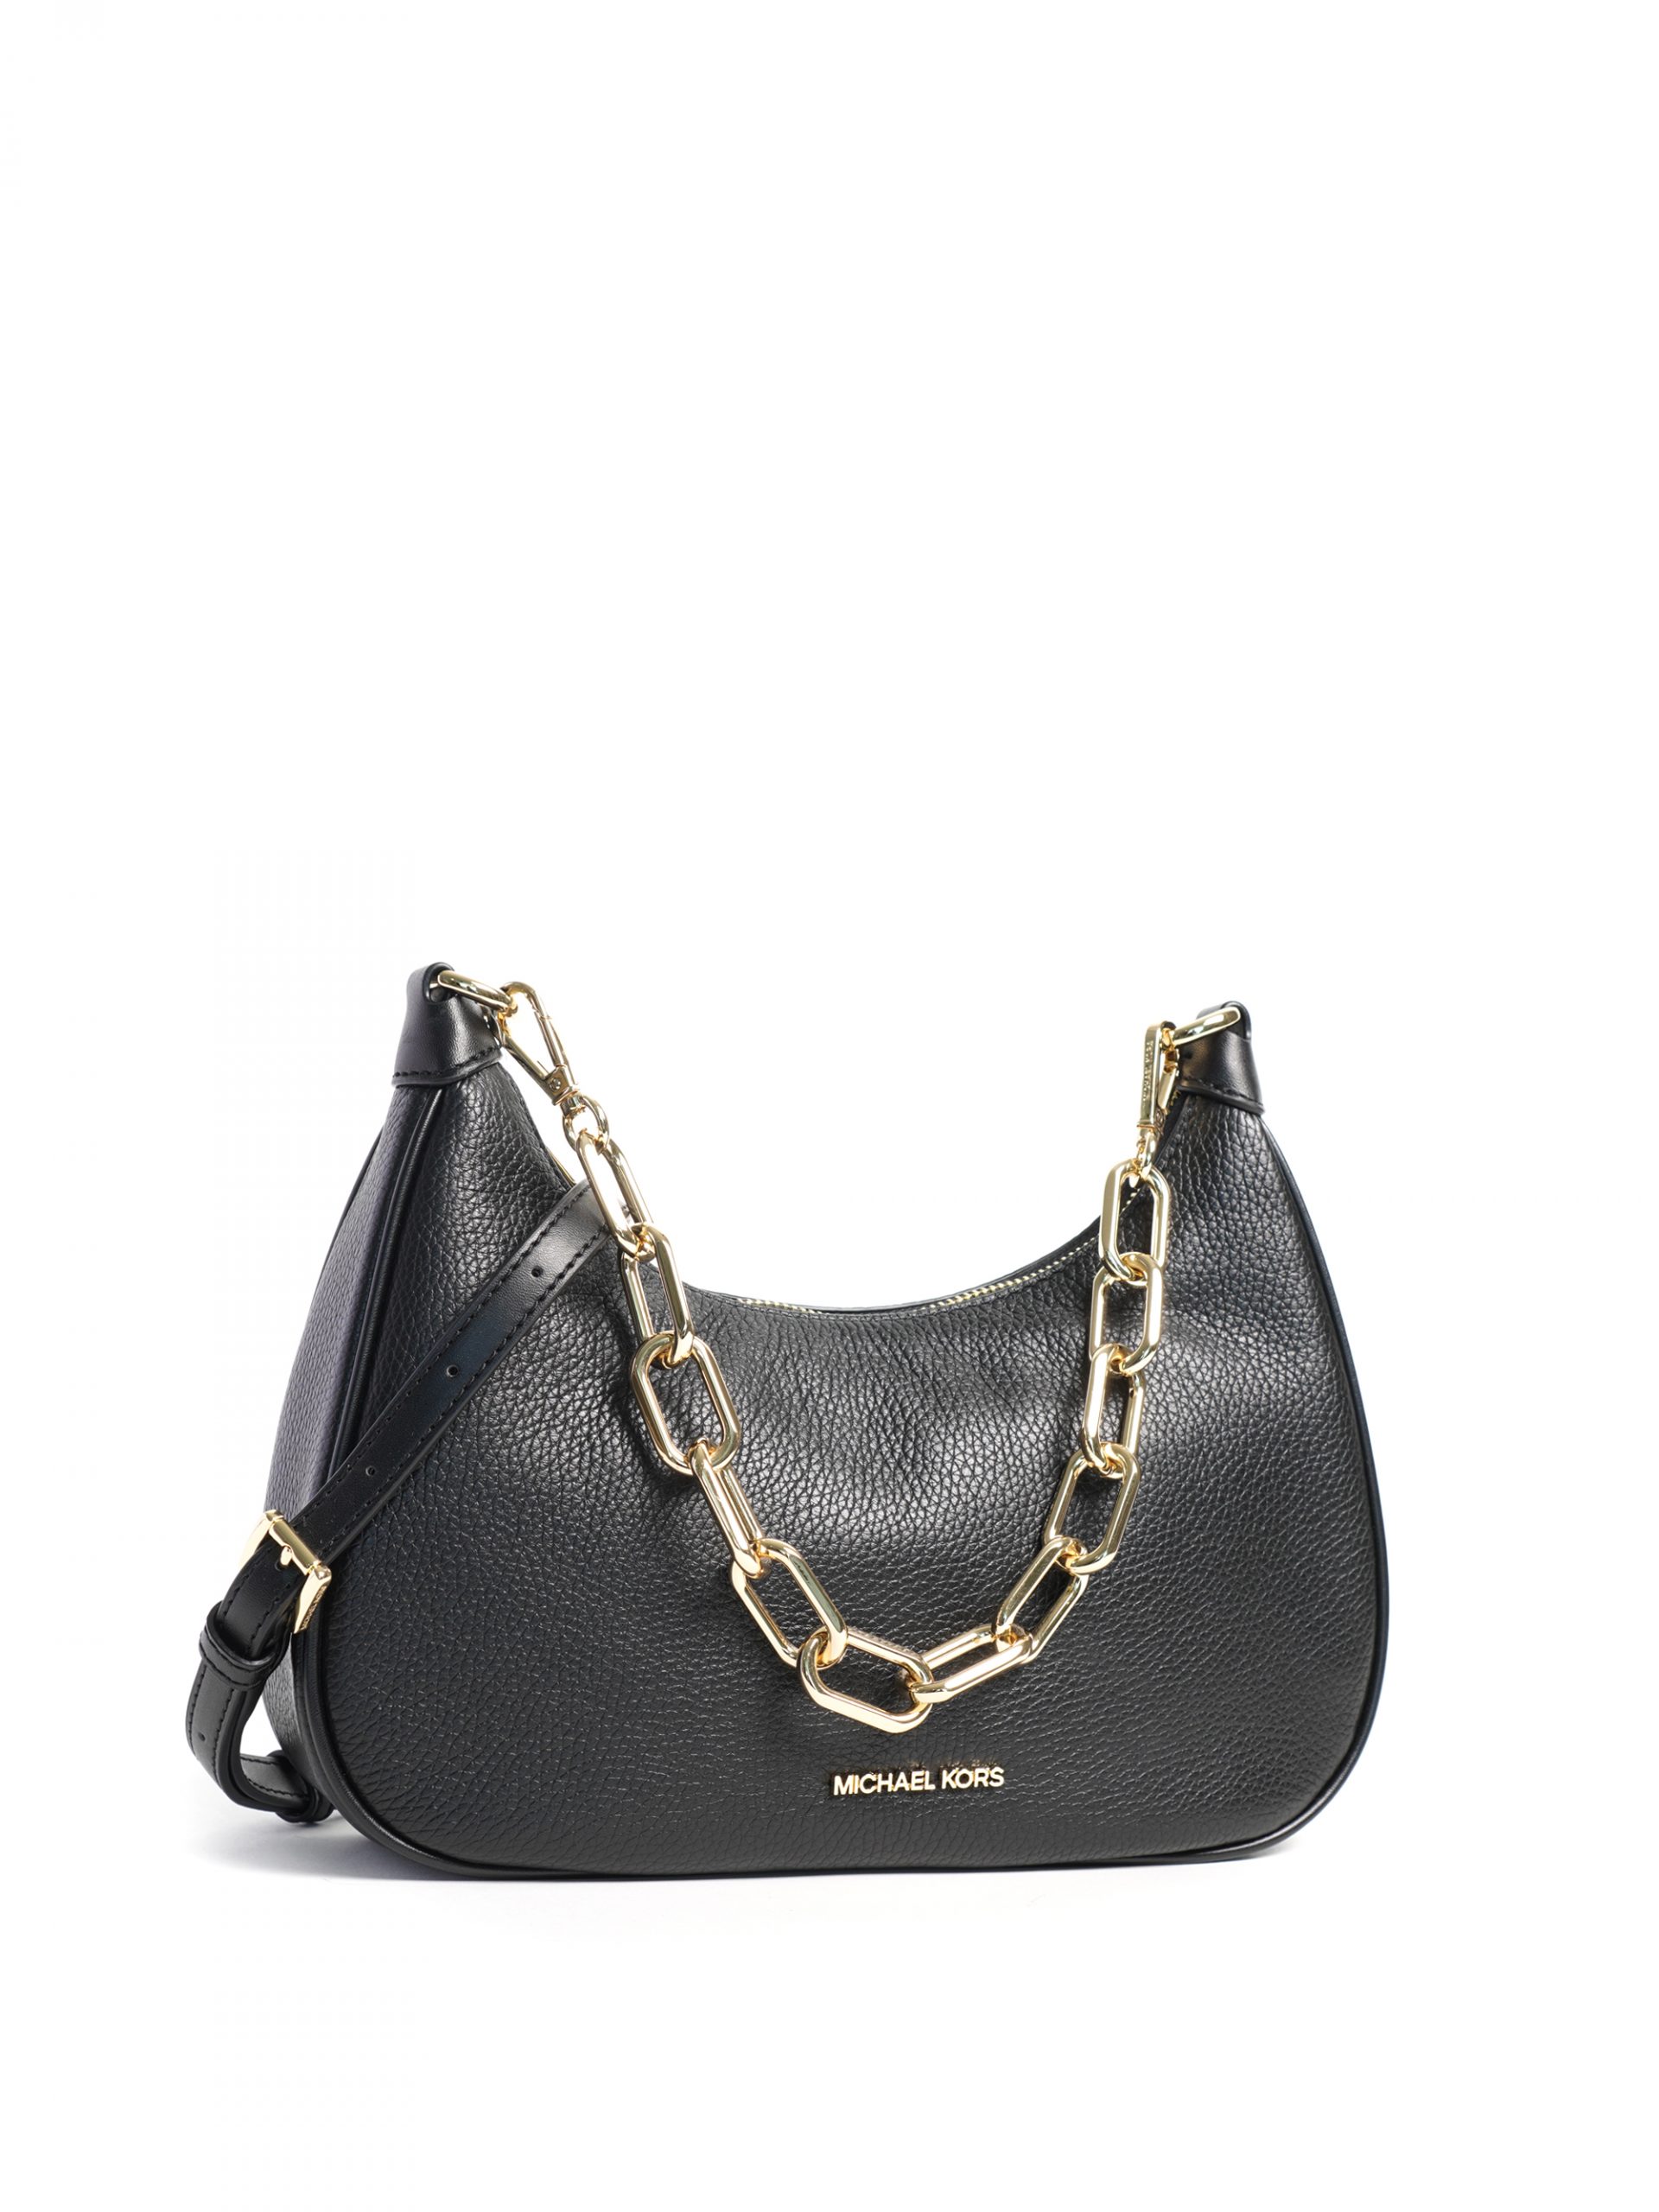 Michael Kors Cora Black Pebbled Leather Large Zip Pouchette Crossbody  Handbag